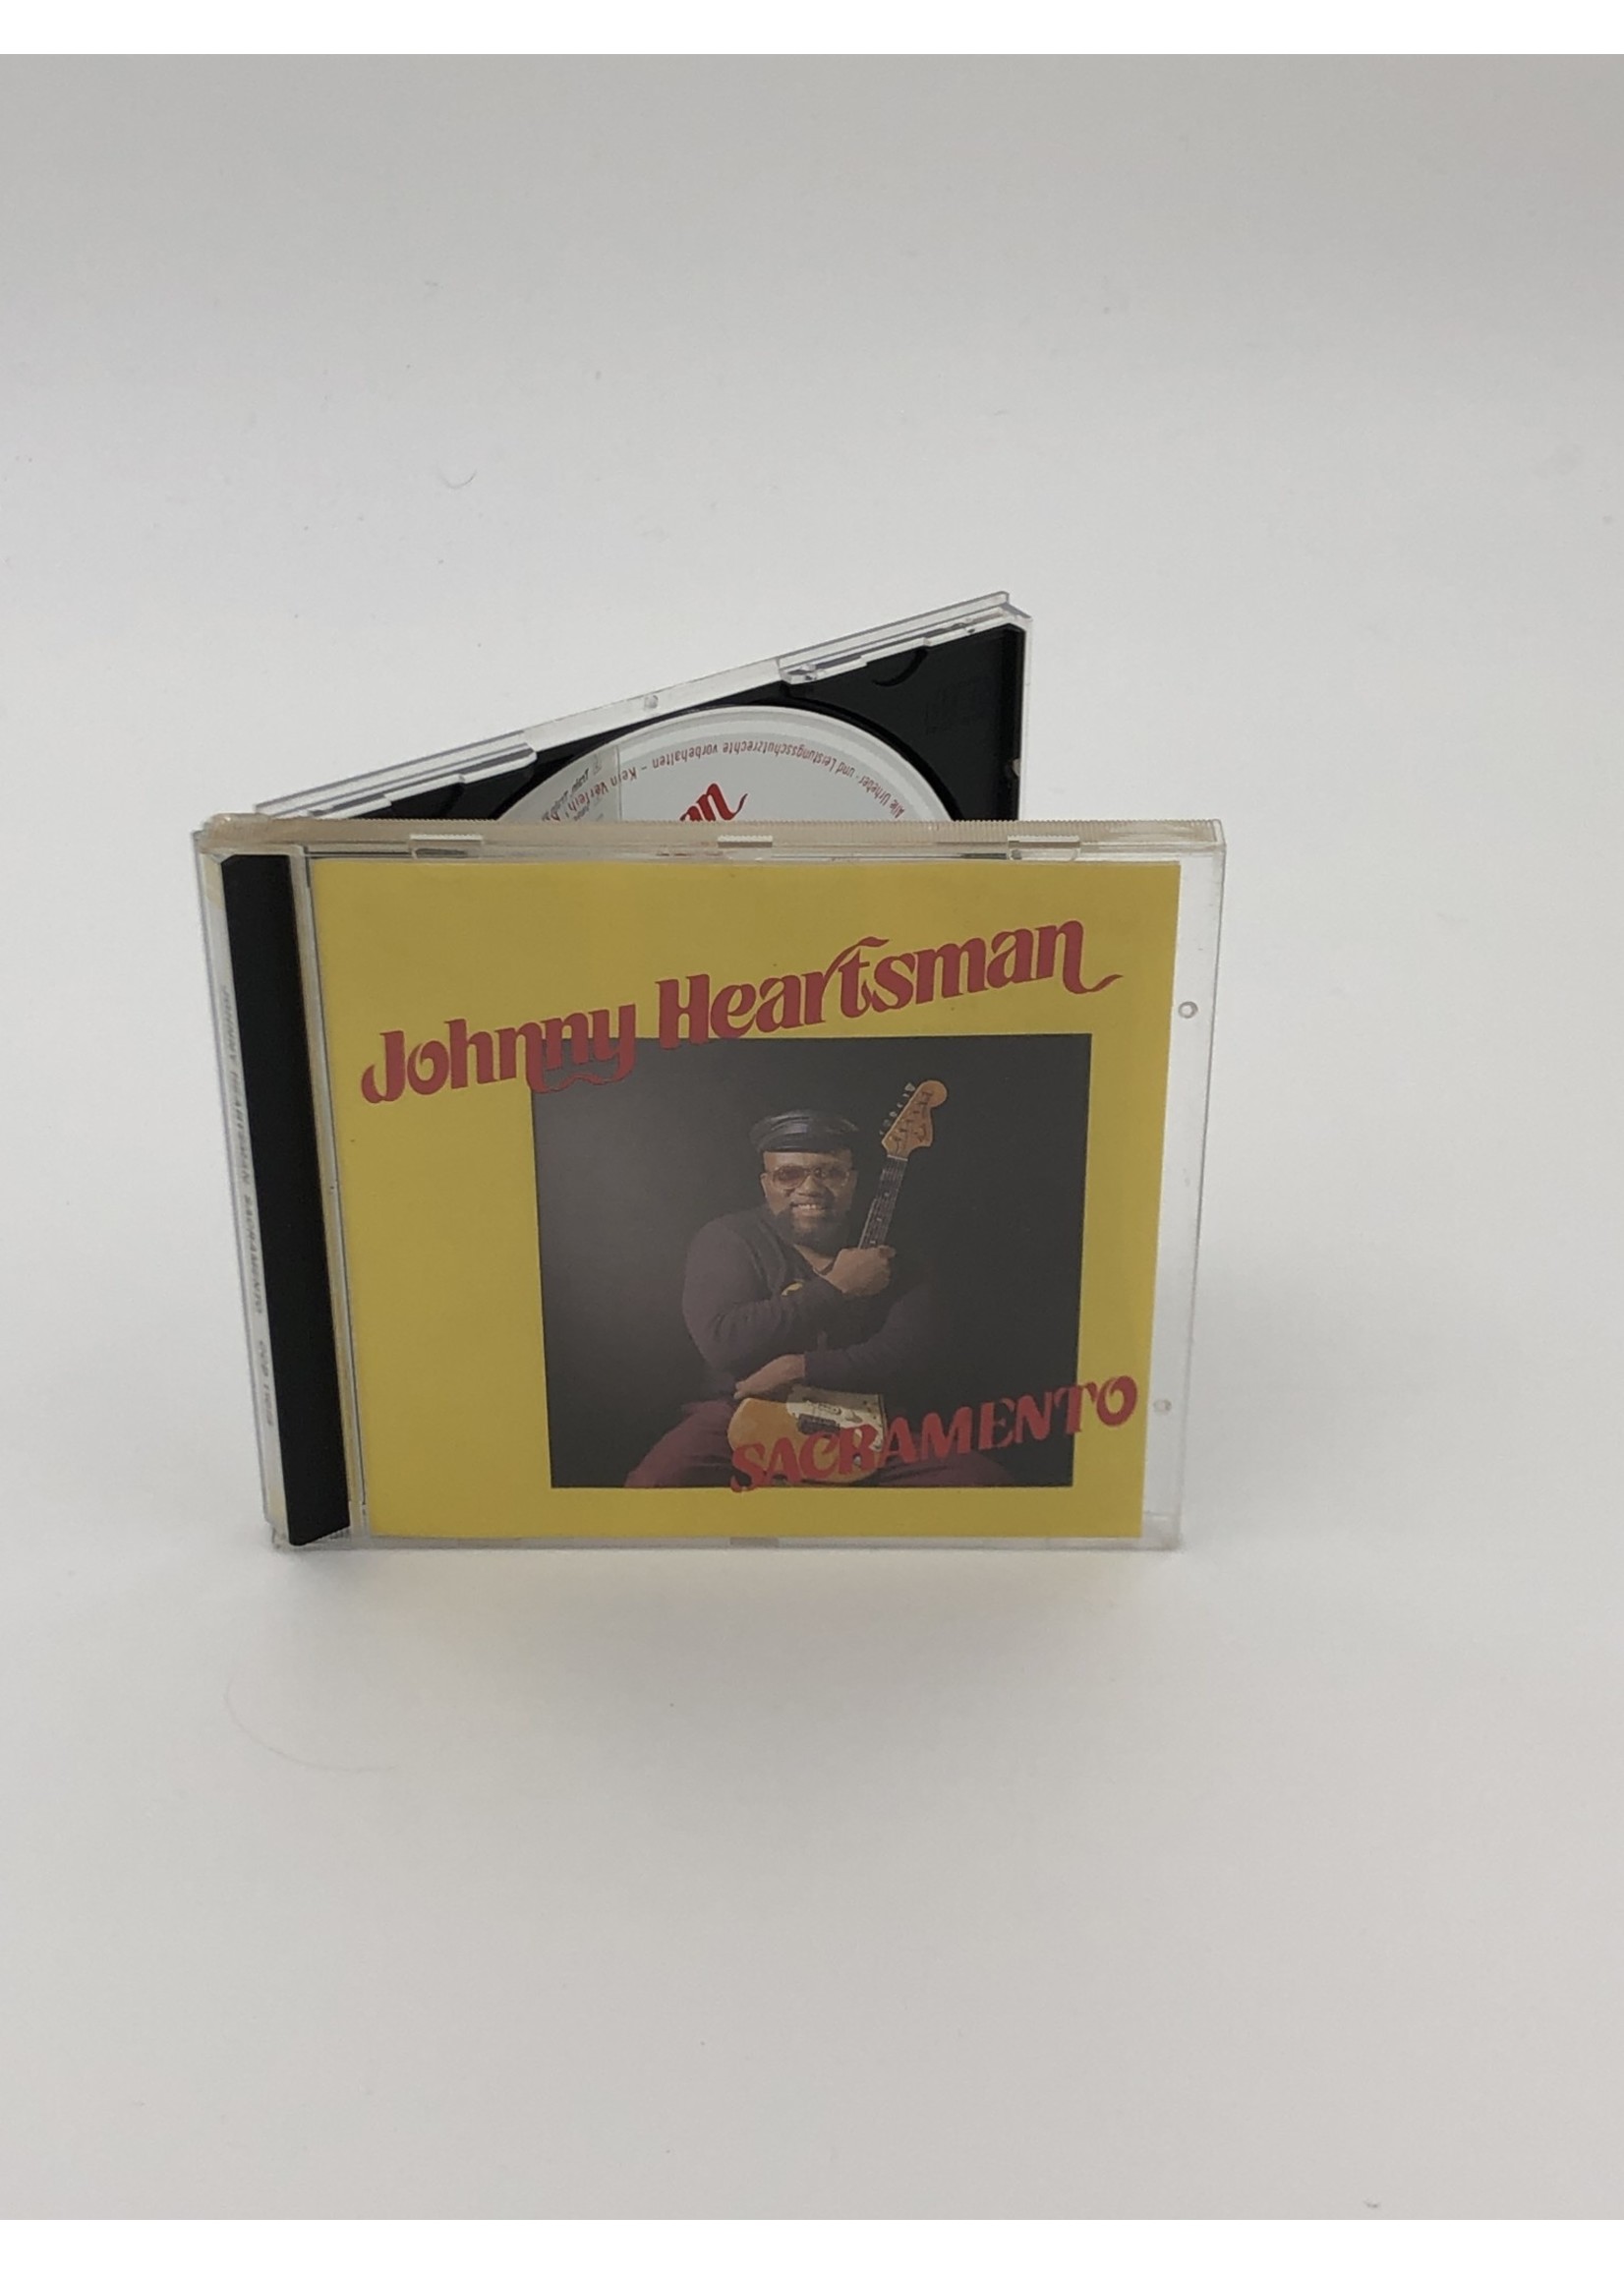 CD Johnny Heartsman: Sacramento CD